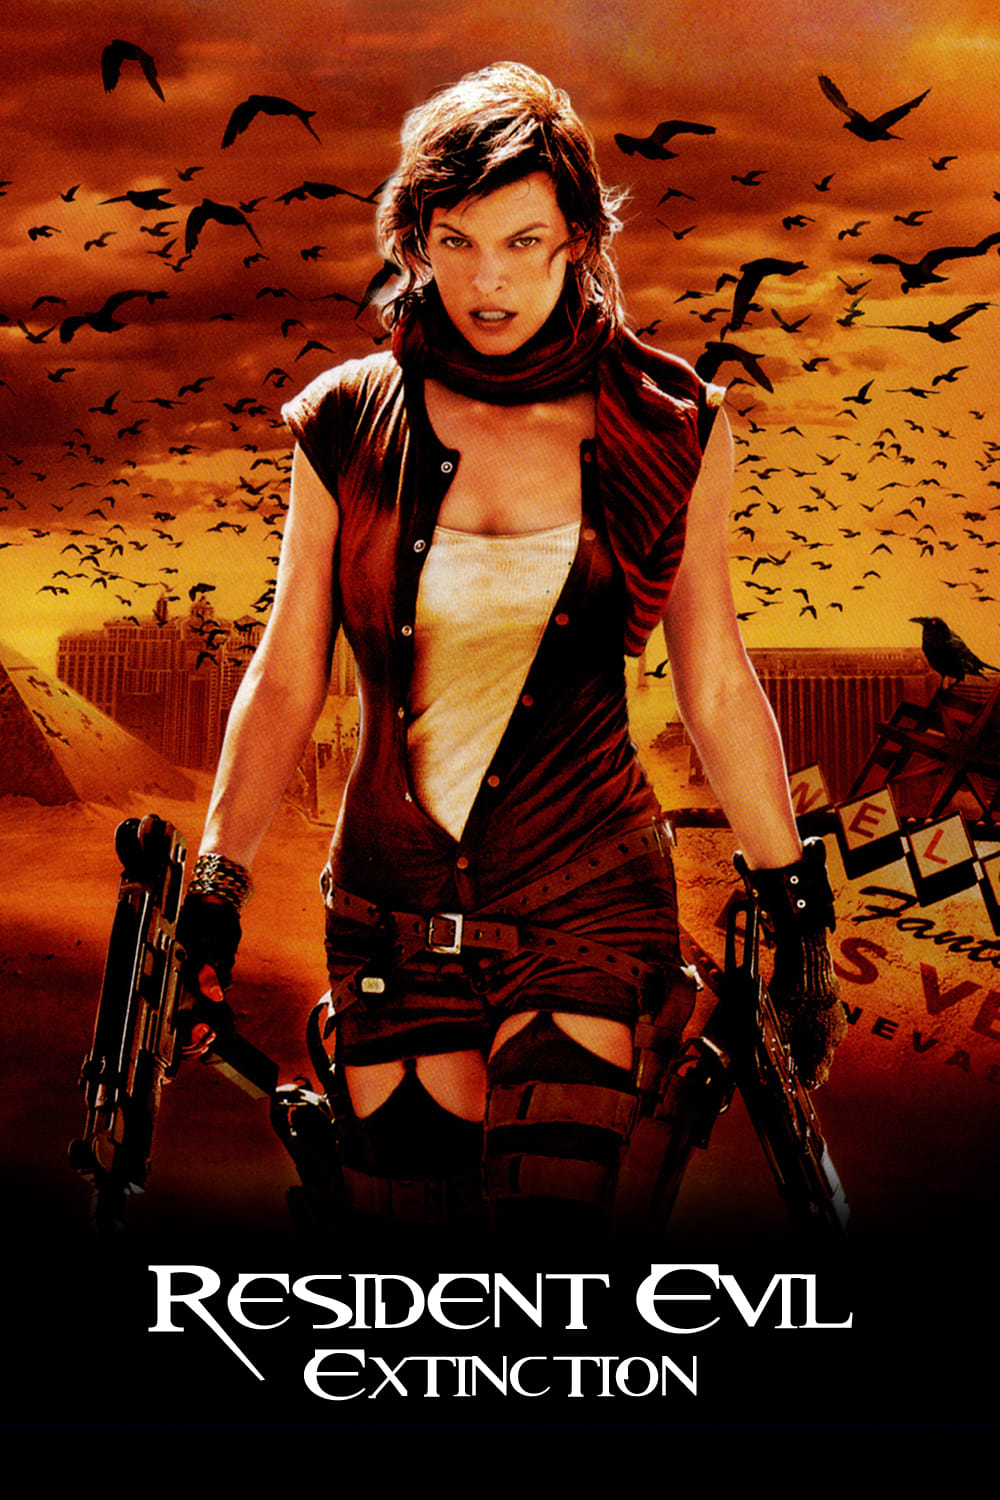 Resident evil 3: extinction 2007 באיכות 4k